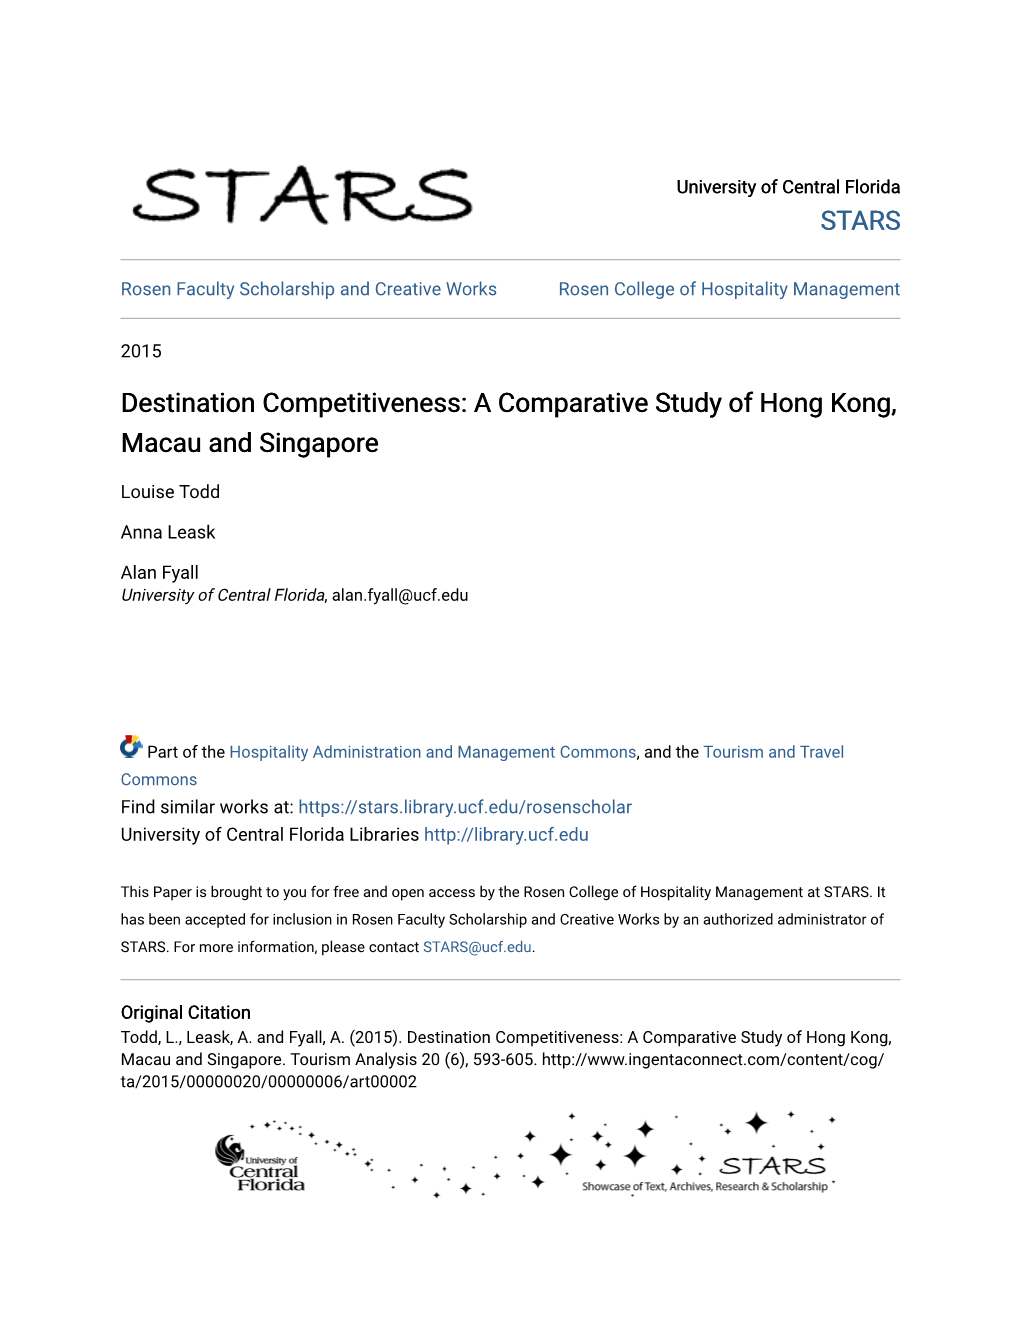 Destination Competitiveness: a Comparative Study of Hong Kong, Macau and Singapore